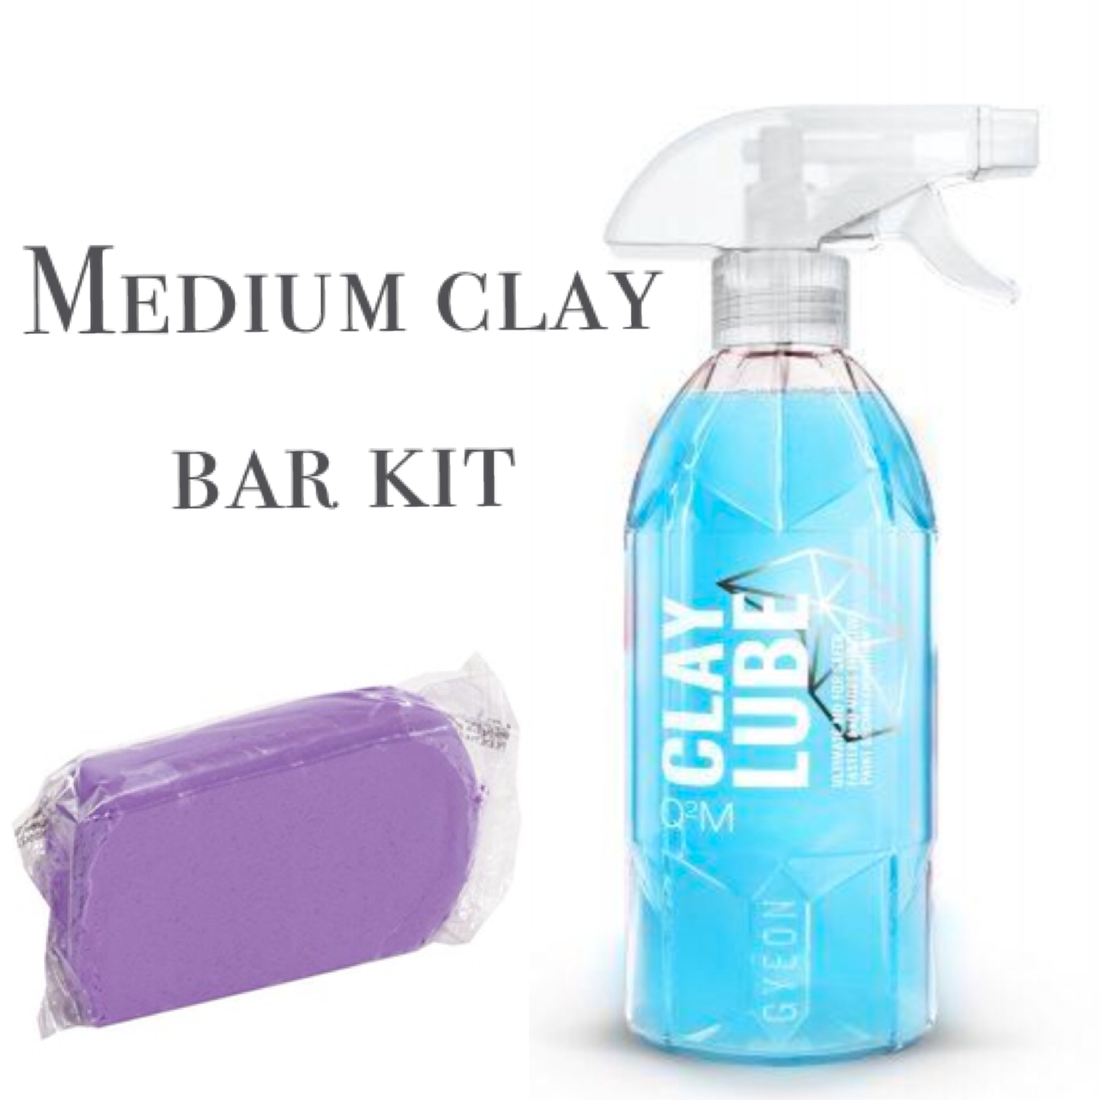 Medium Clay Bar Kit - Detailing Connect